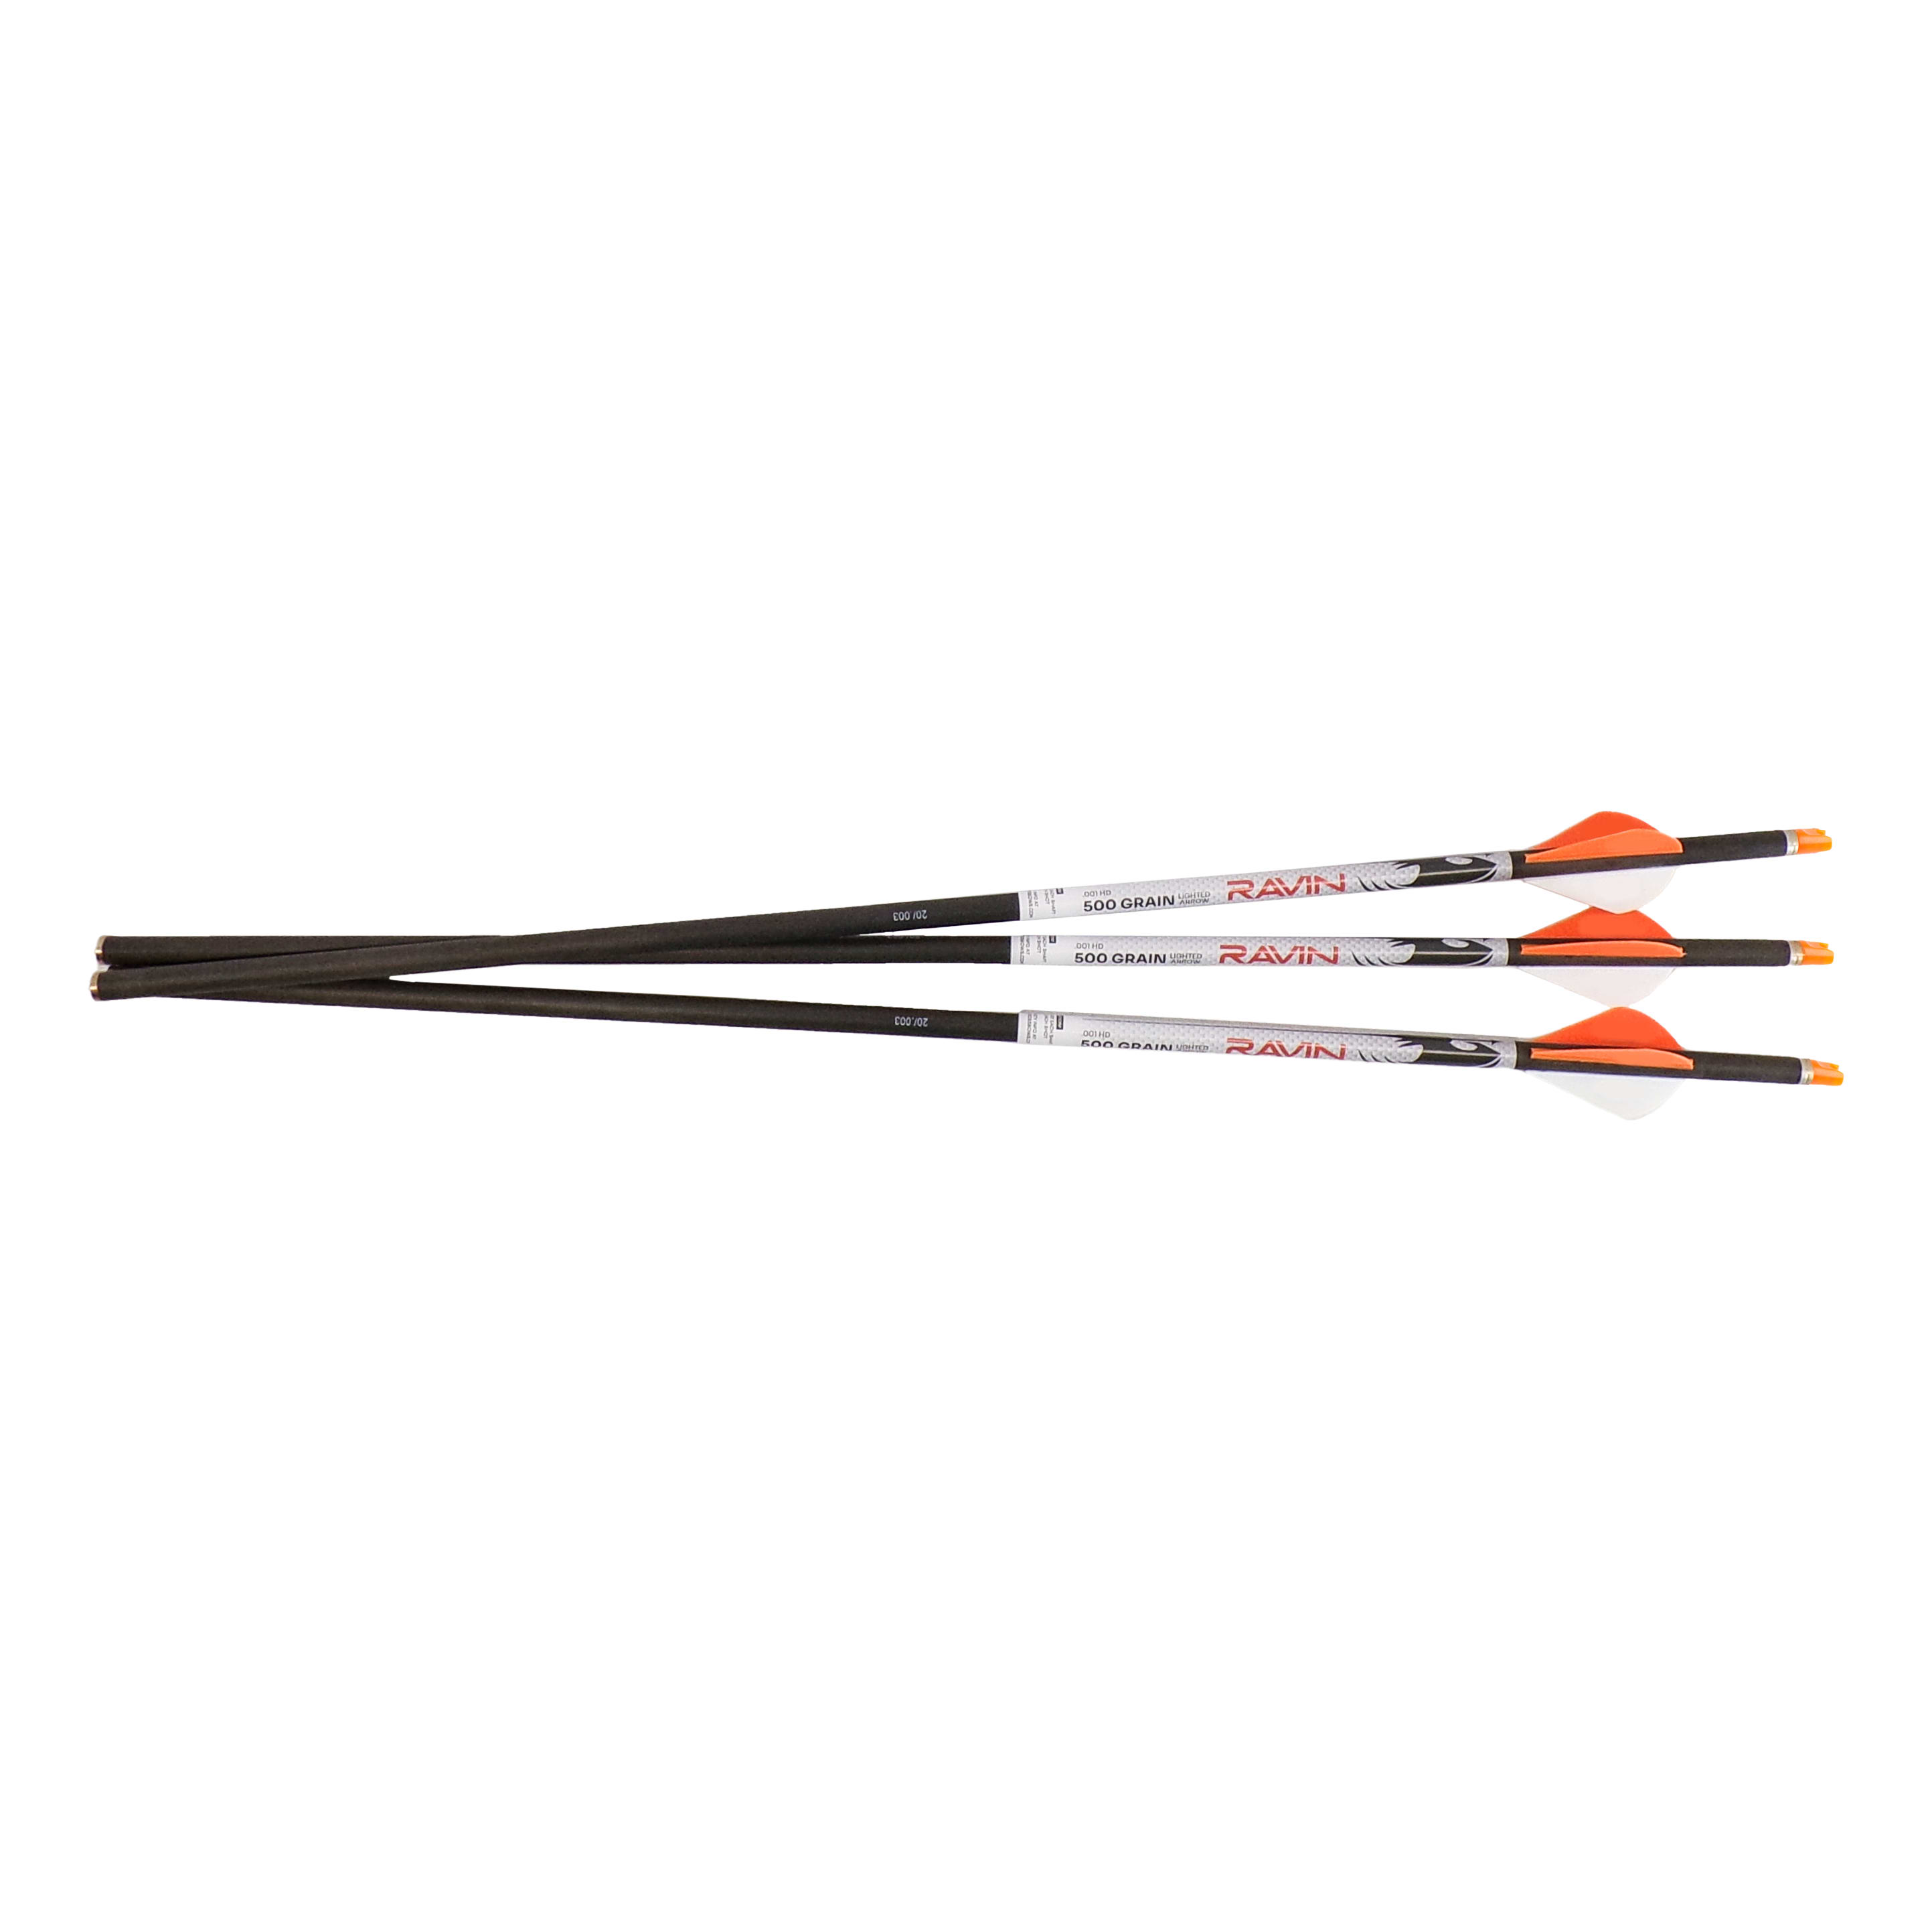 Ravin .001 HD 500 Grain Match-Grade Lighted Crossbow Arrows